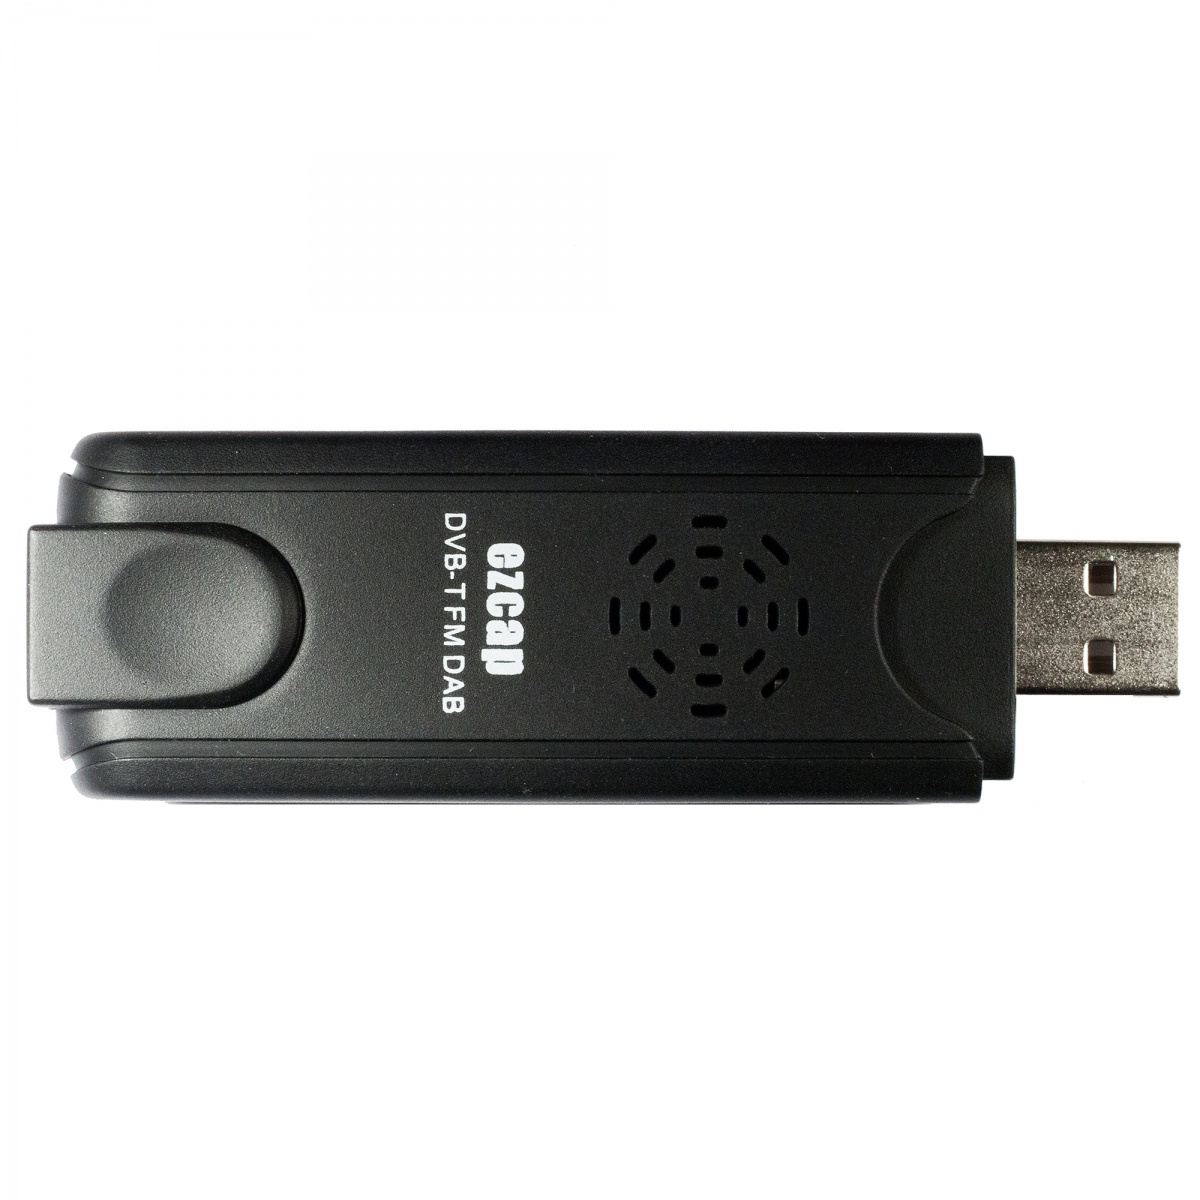 Nooelec - EzTV645 DVB-T USB Stick (FC0013) w/ Antenna and Control - USB OTA Receivers